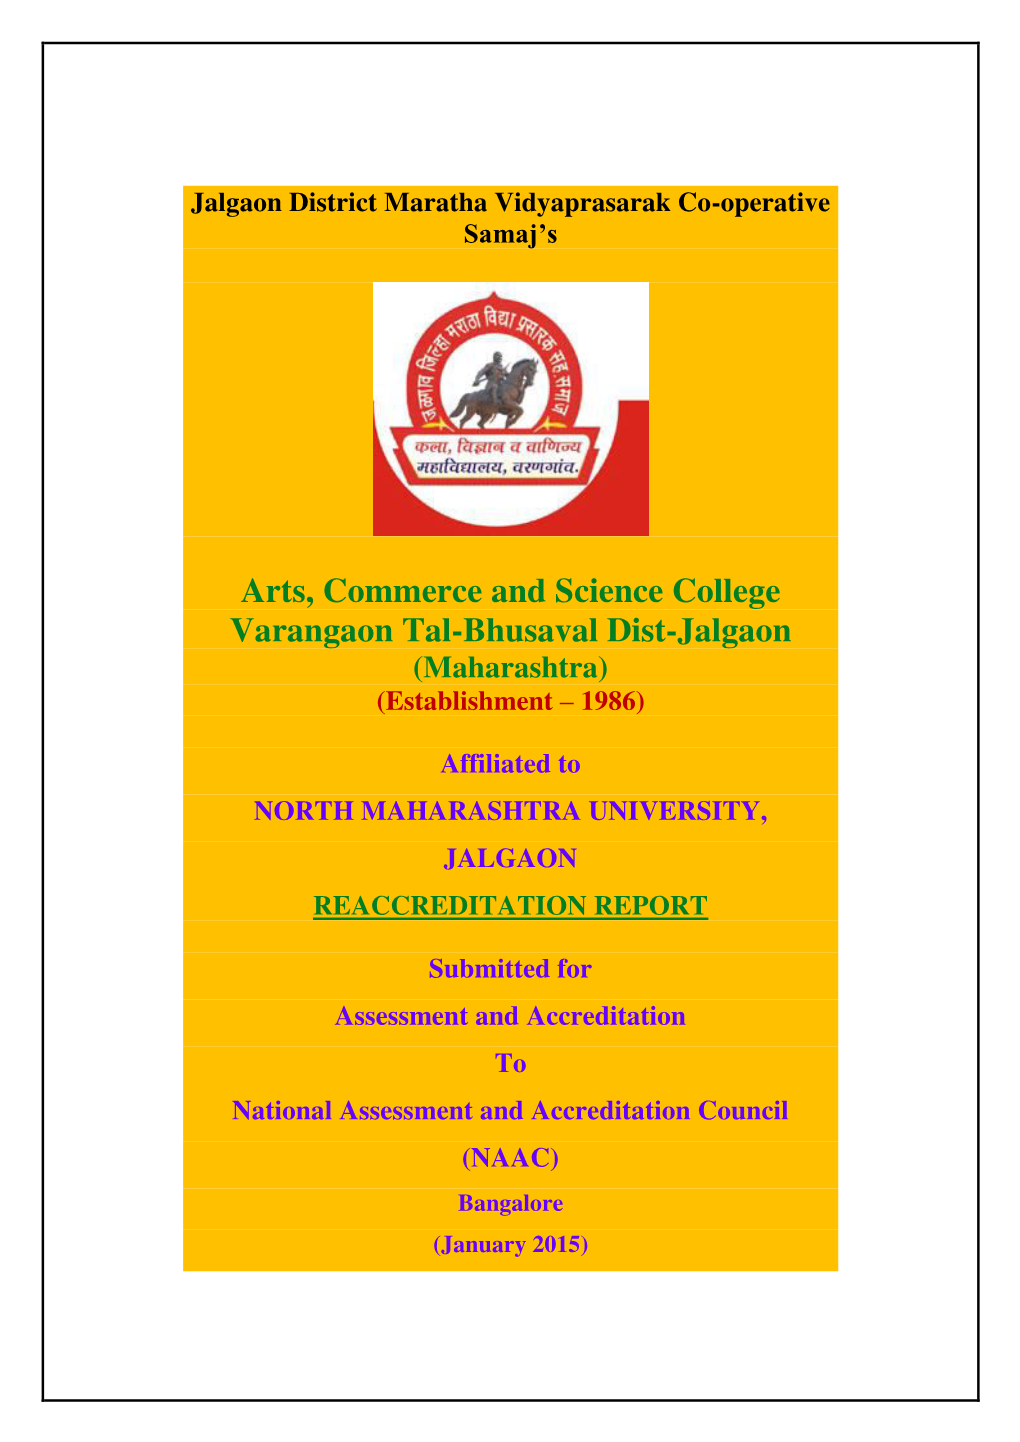 Arts, Commerce and Science College Varangaon Tal-Bhusaval Dist-Jalgaon (Maharashtra) (Establishment – 1986)